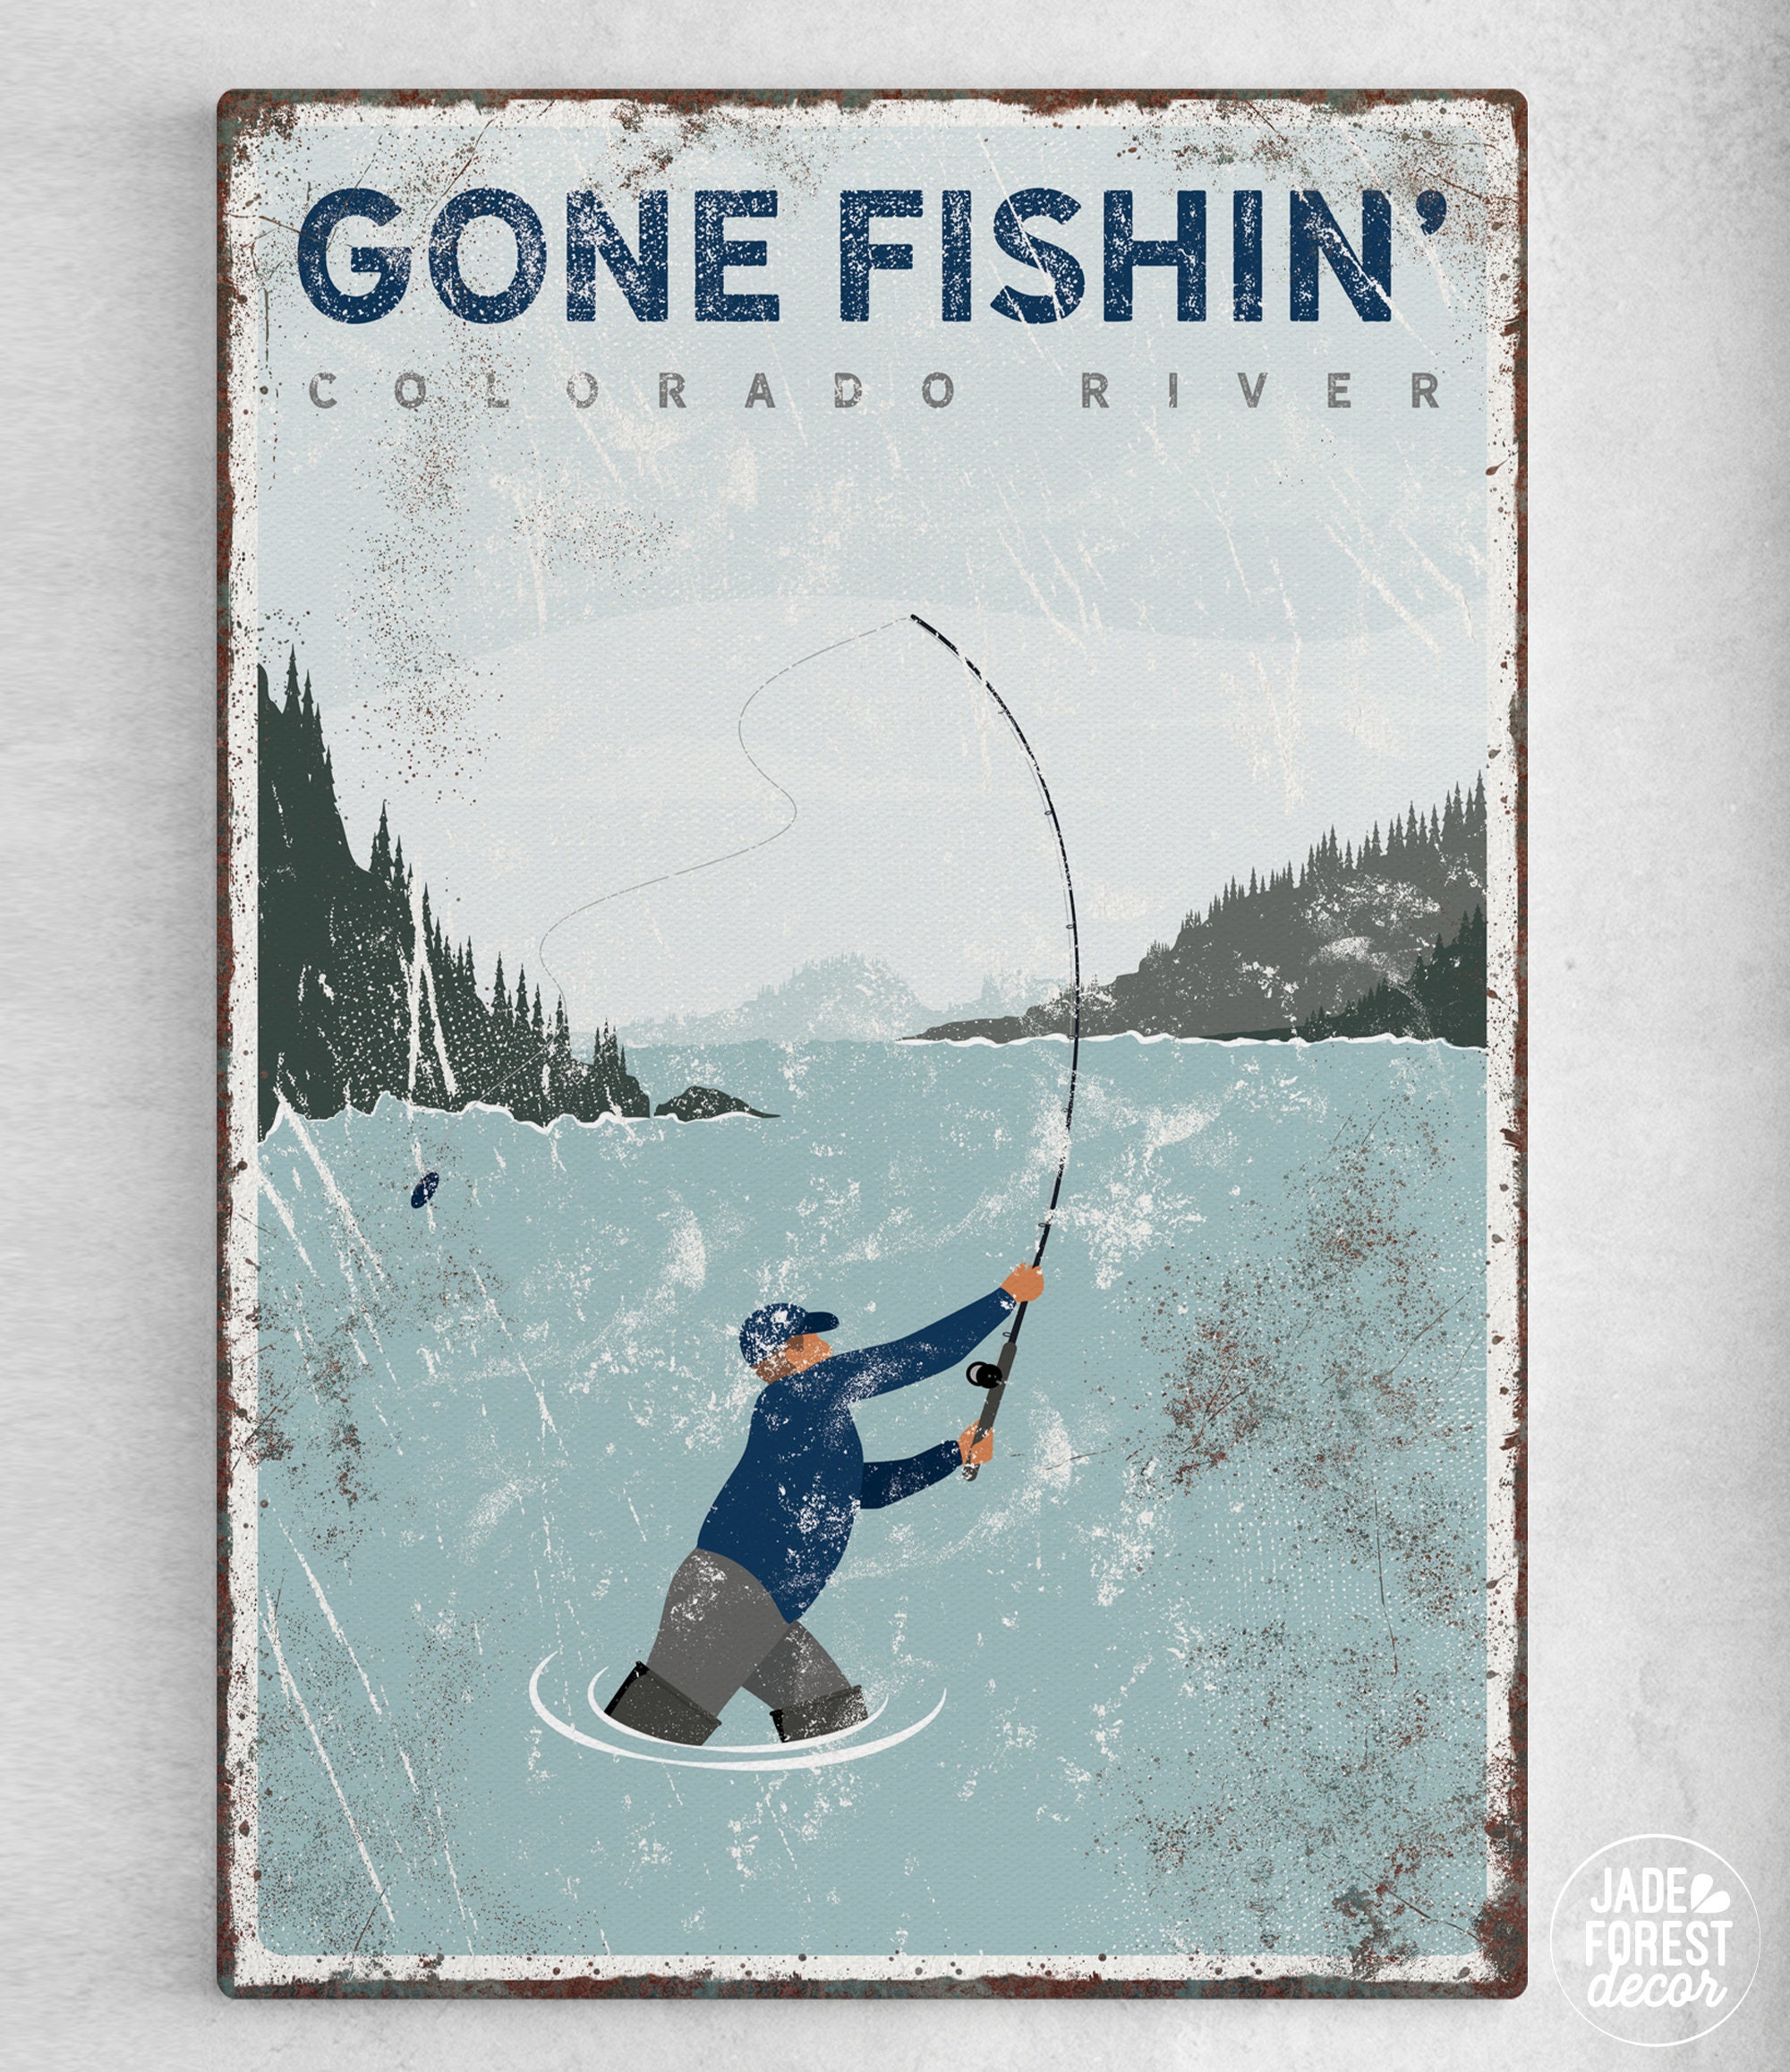 Gone fishing Colorado River poster > custom vintage fly fishing art print  for lake house decor, nautical decor housewarming gift {vpl}